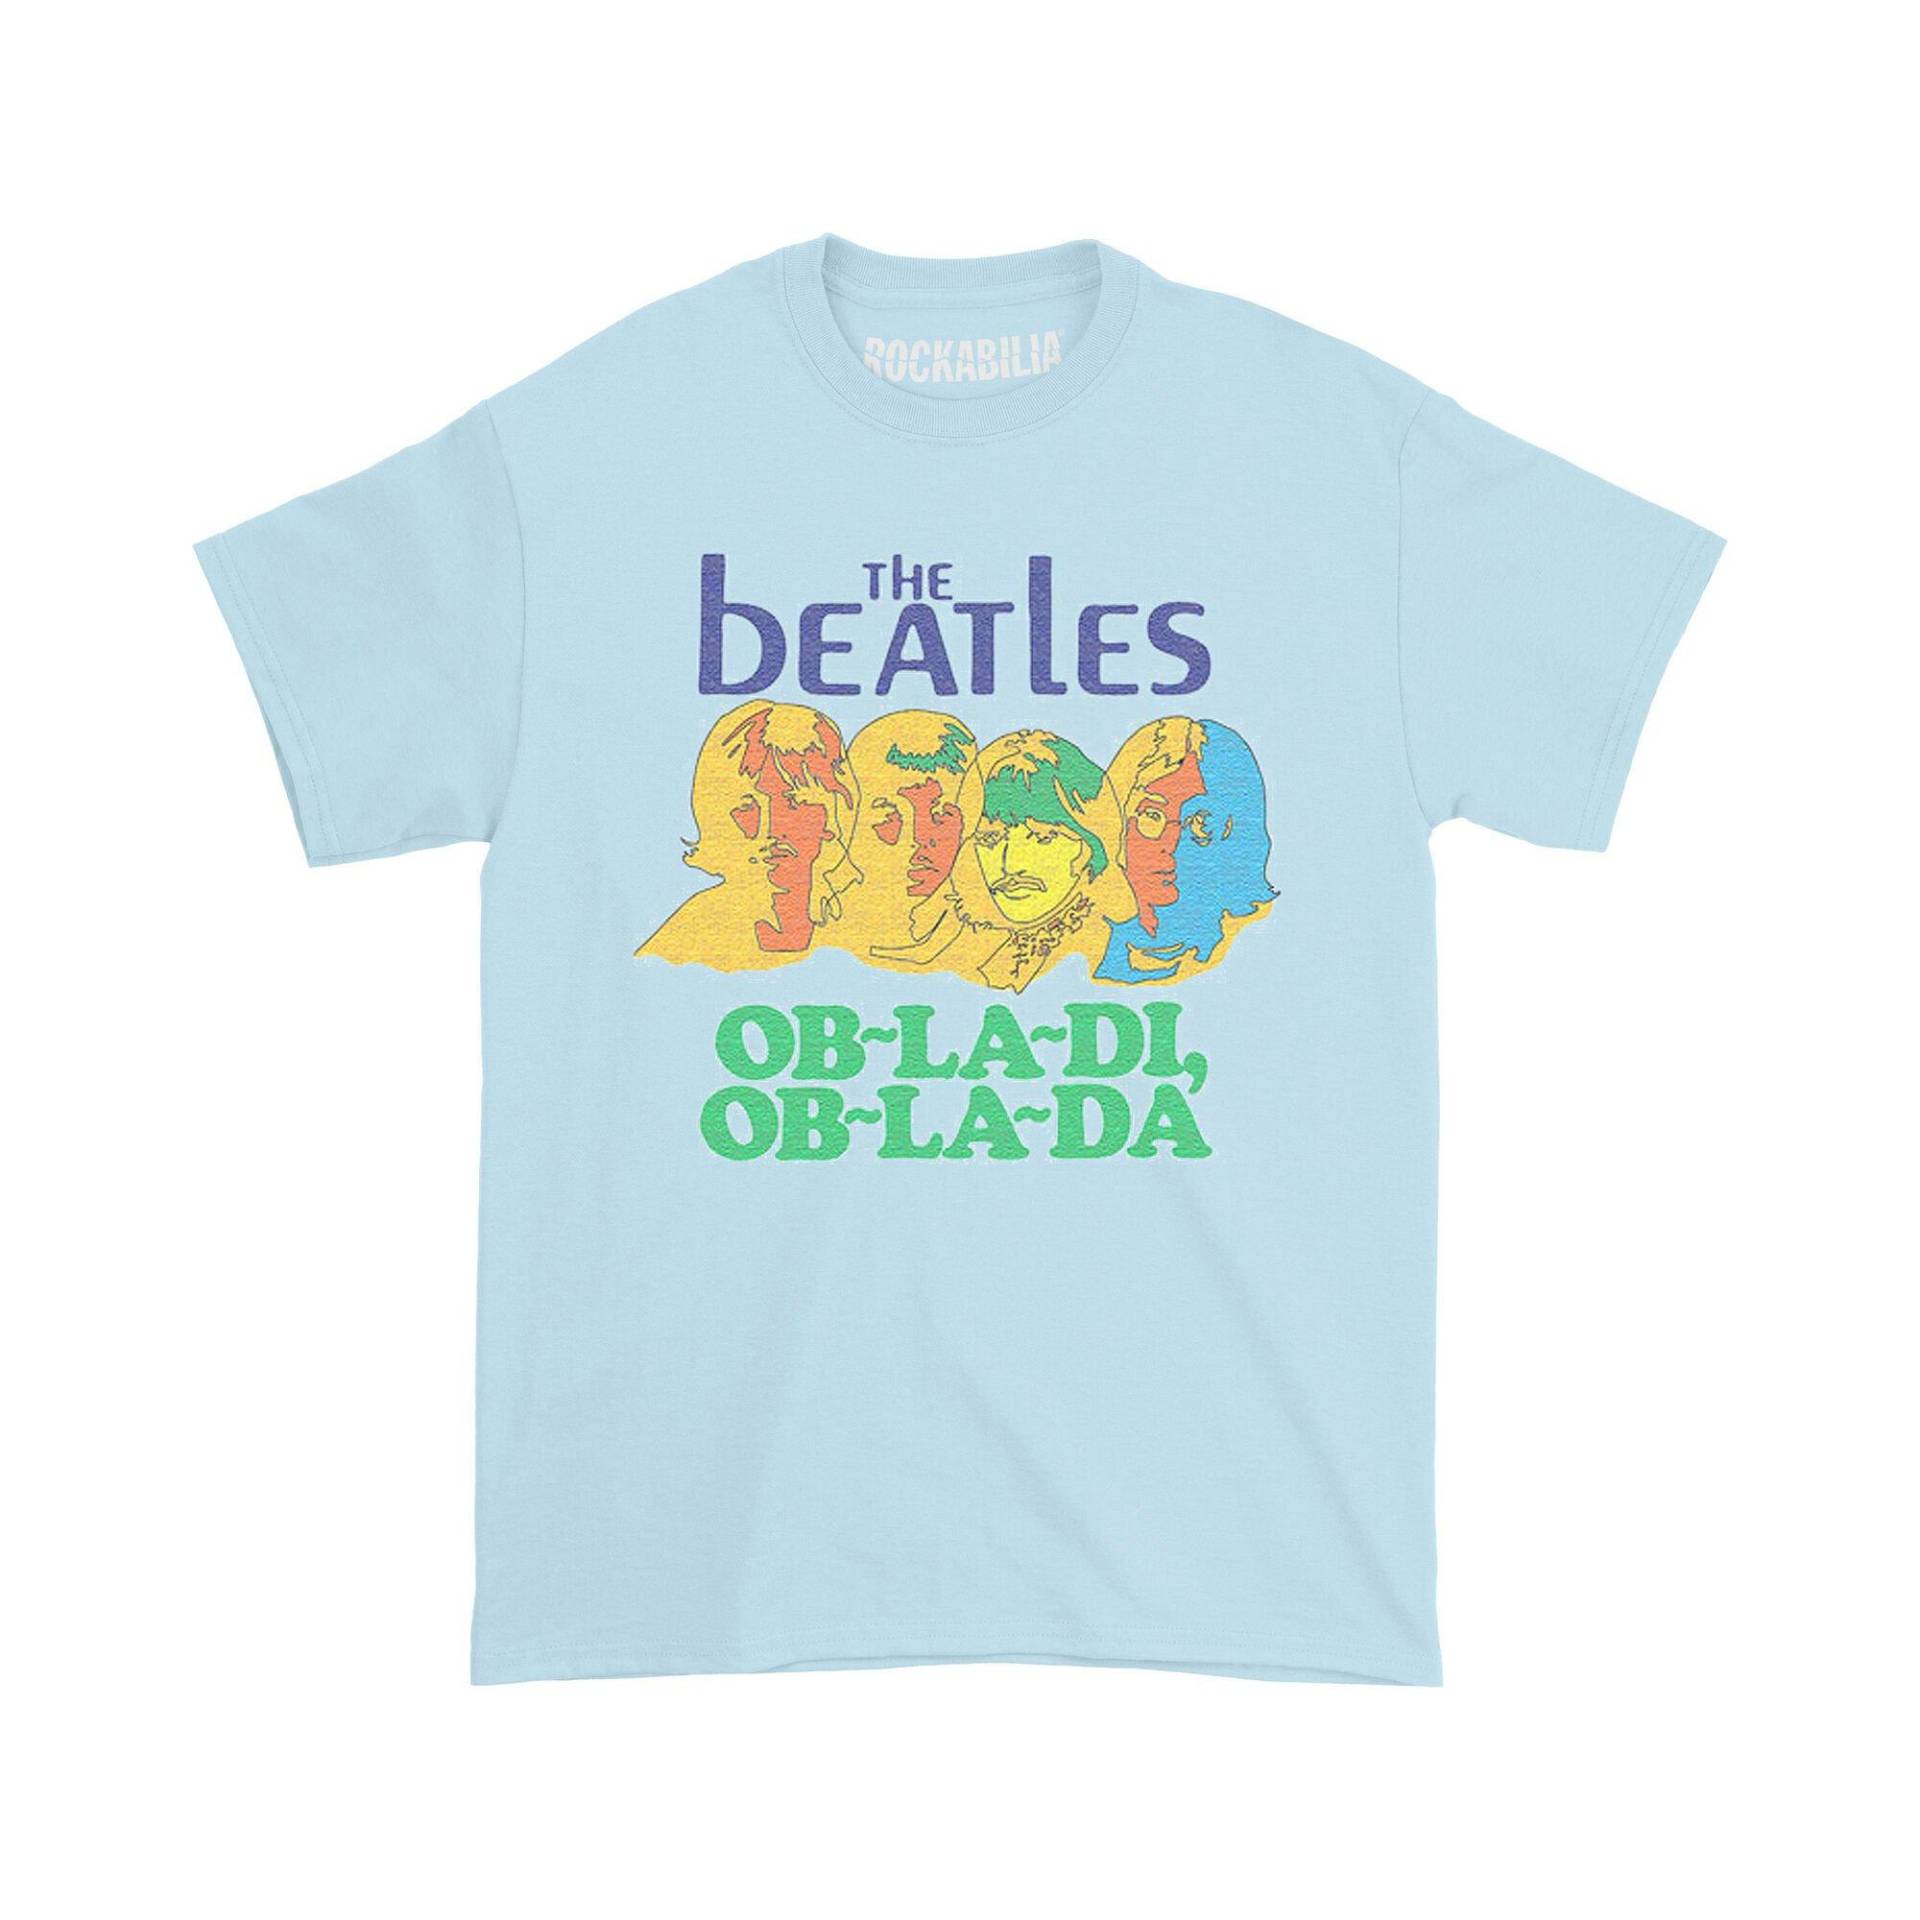 Obladi Tshirt Damen Blau XL von The Beatles